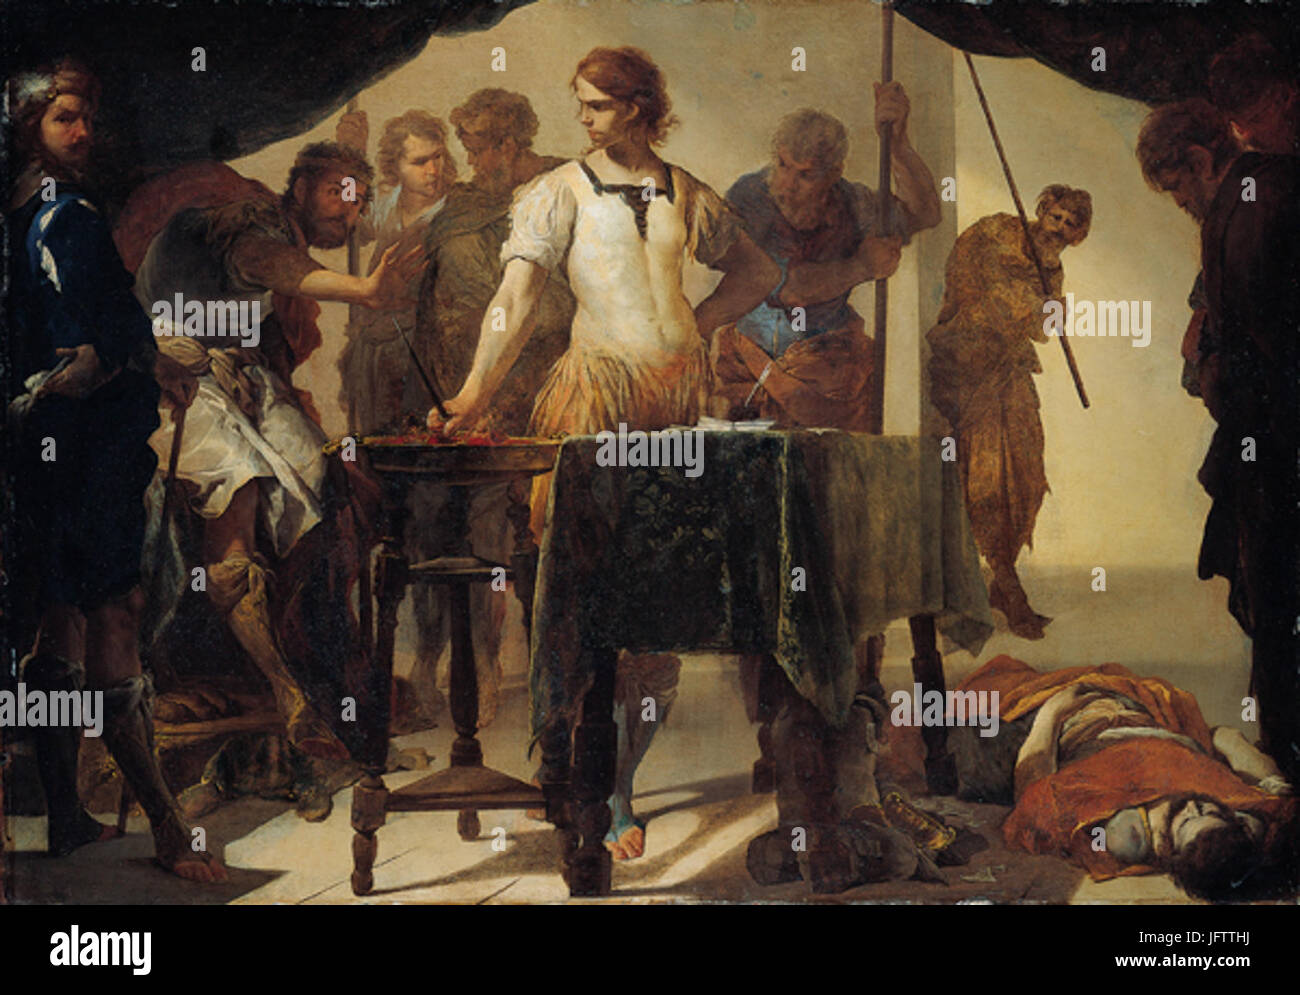 Caius Mucius Scaevola auxquels le roi Porsenna huile sur toile de cuivre par Bernardo Cavallino Banque D'Images